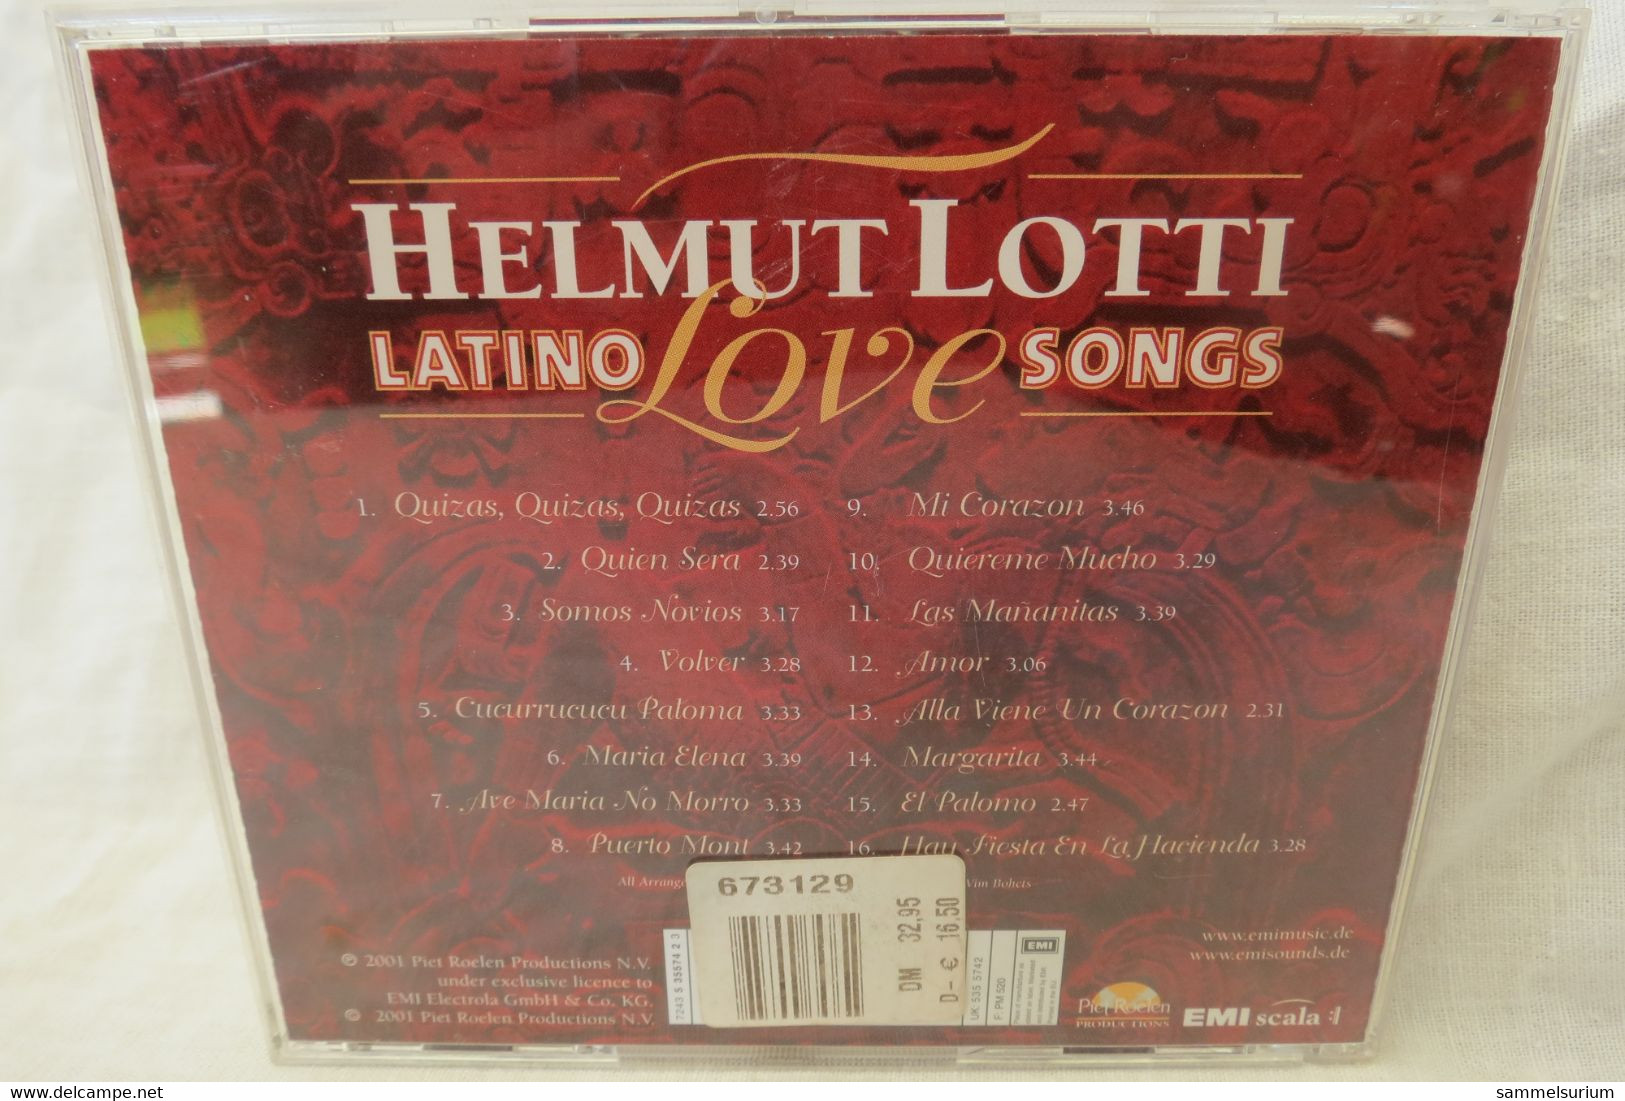 CD Helmut Lotti "Latino Love Songs" - Other - Spanish Music